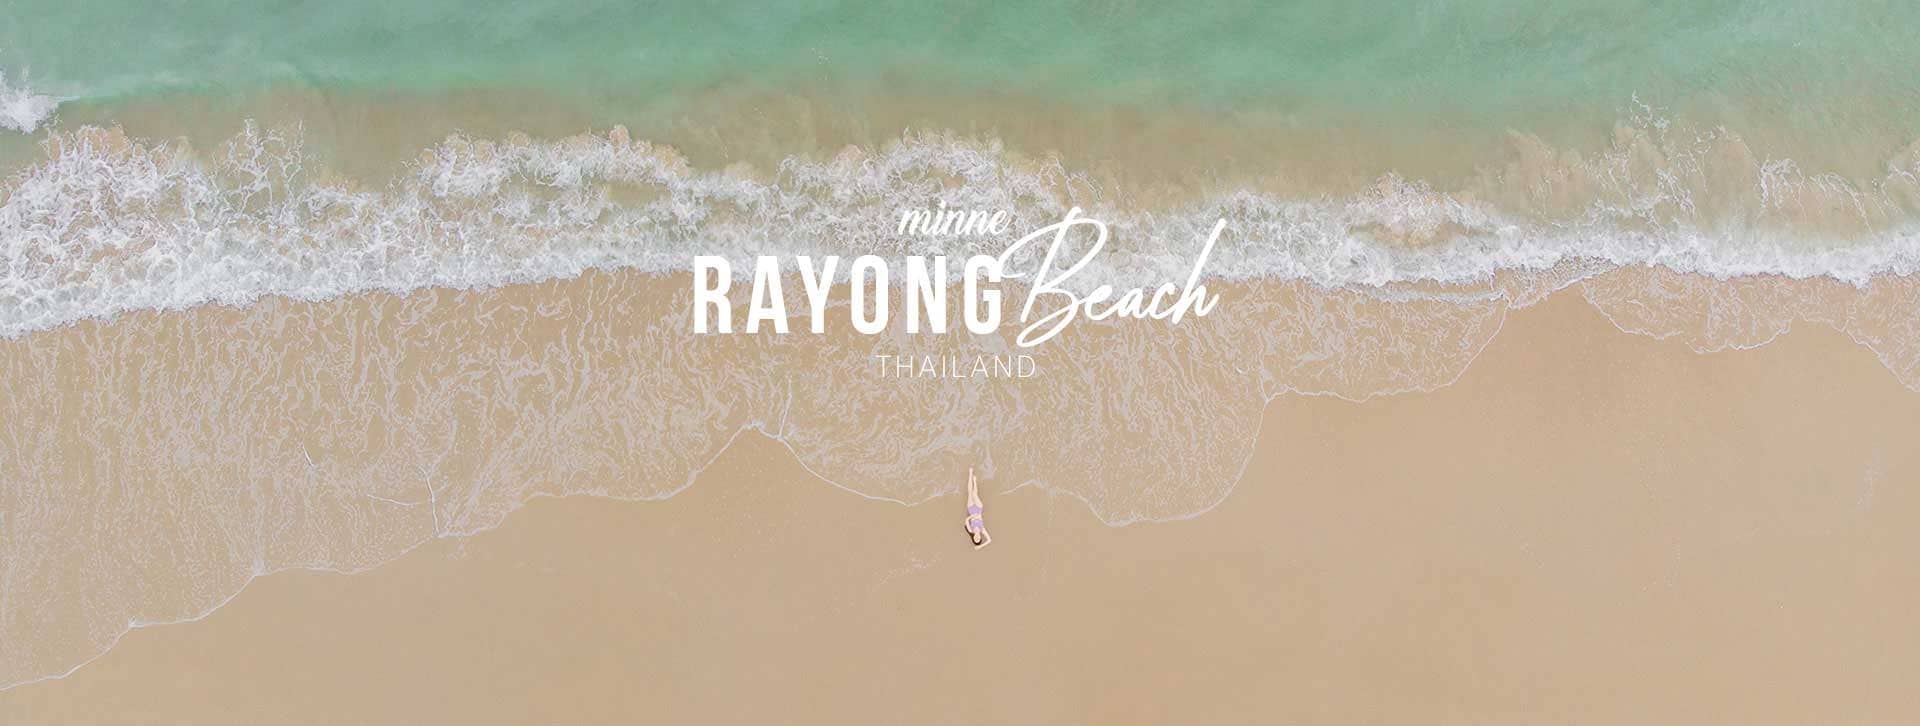 m rayong beach thailand with bikini long cover